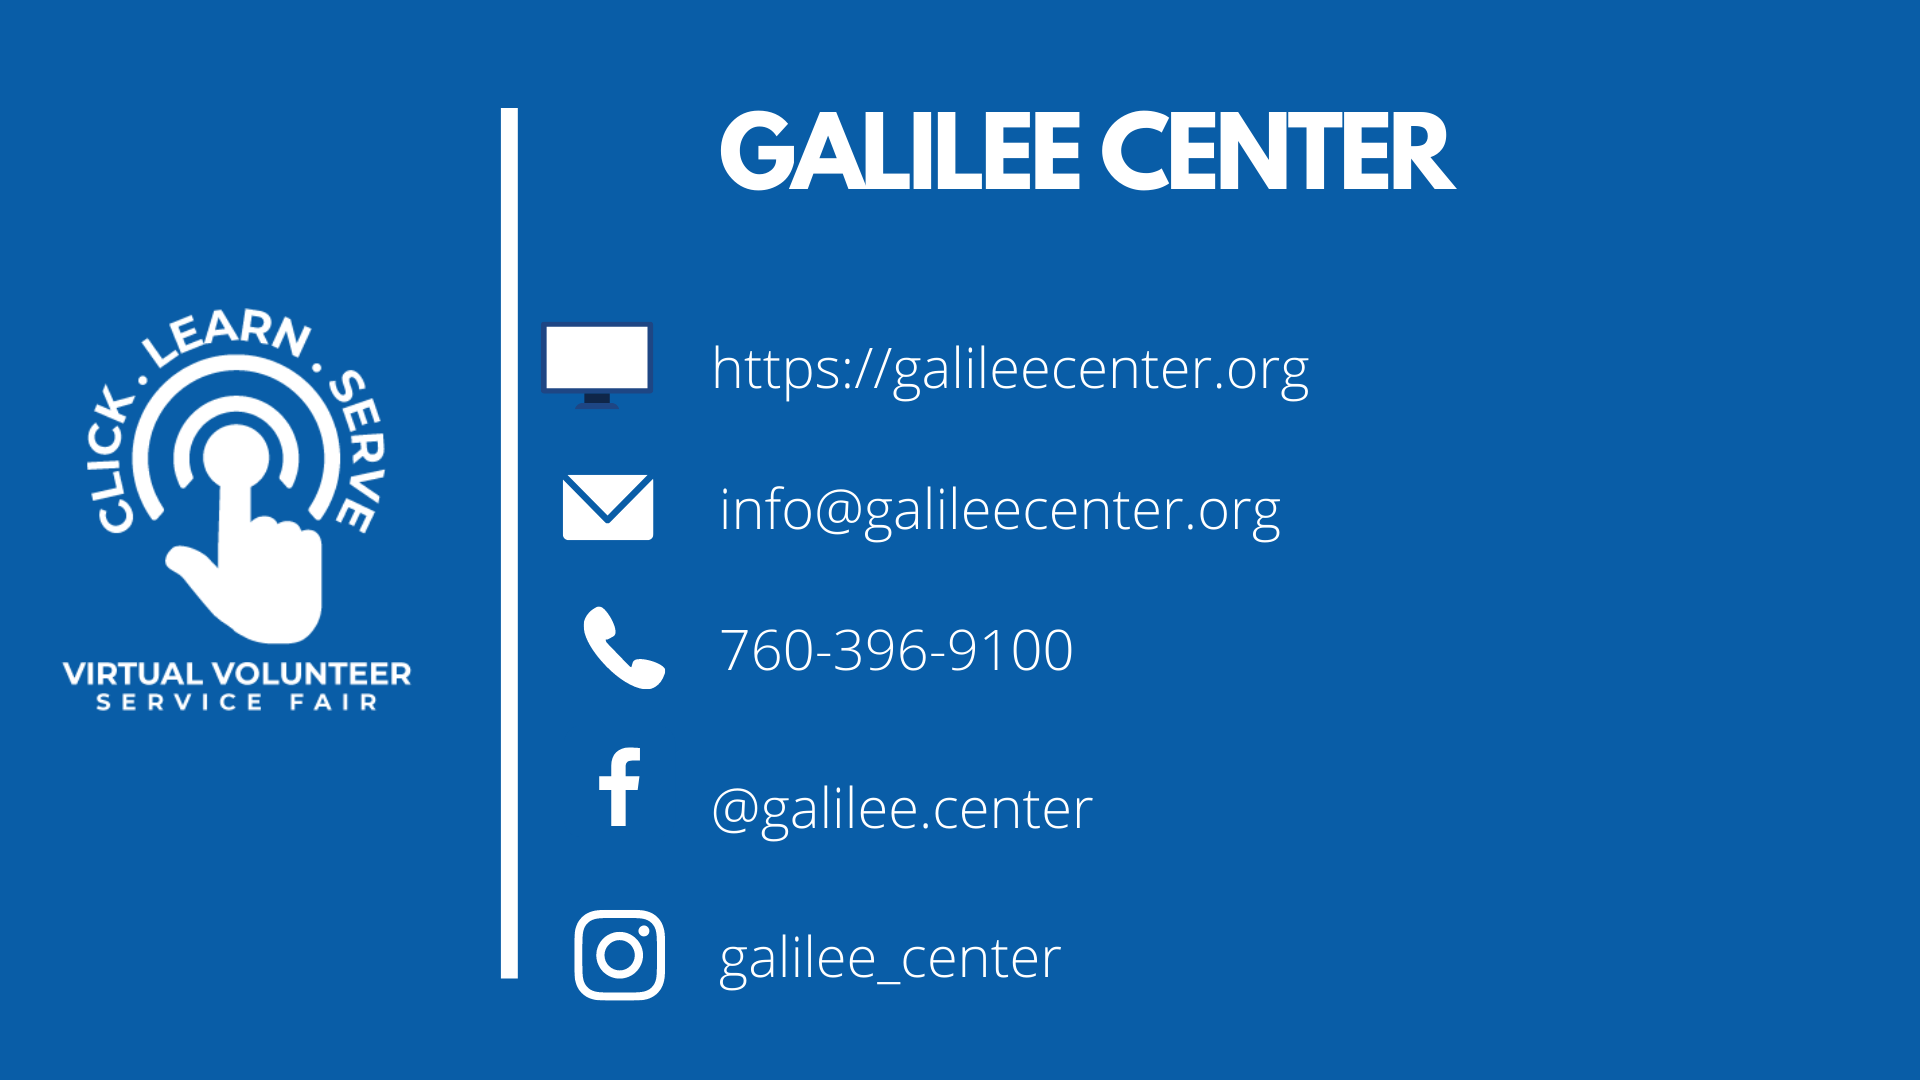 Galilee Center nonprofit video for the Virtual Volunteer Service Fair.